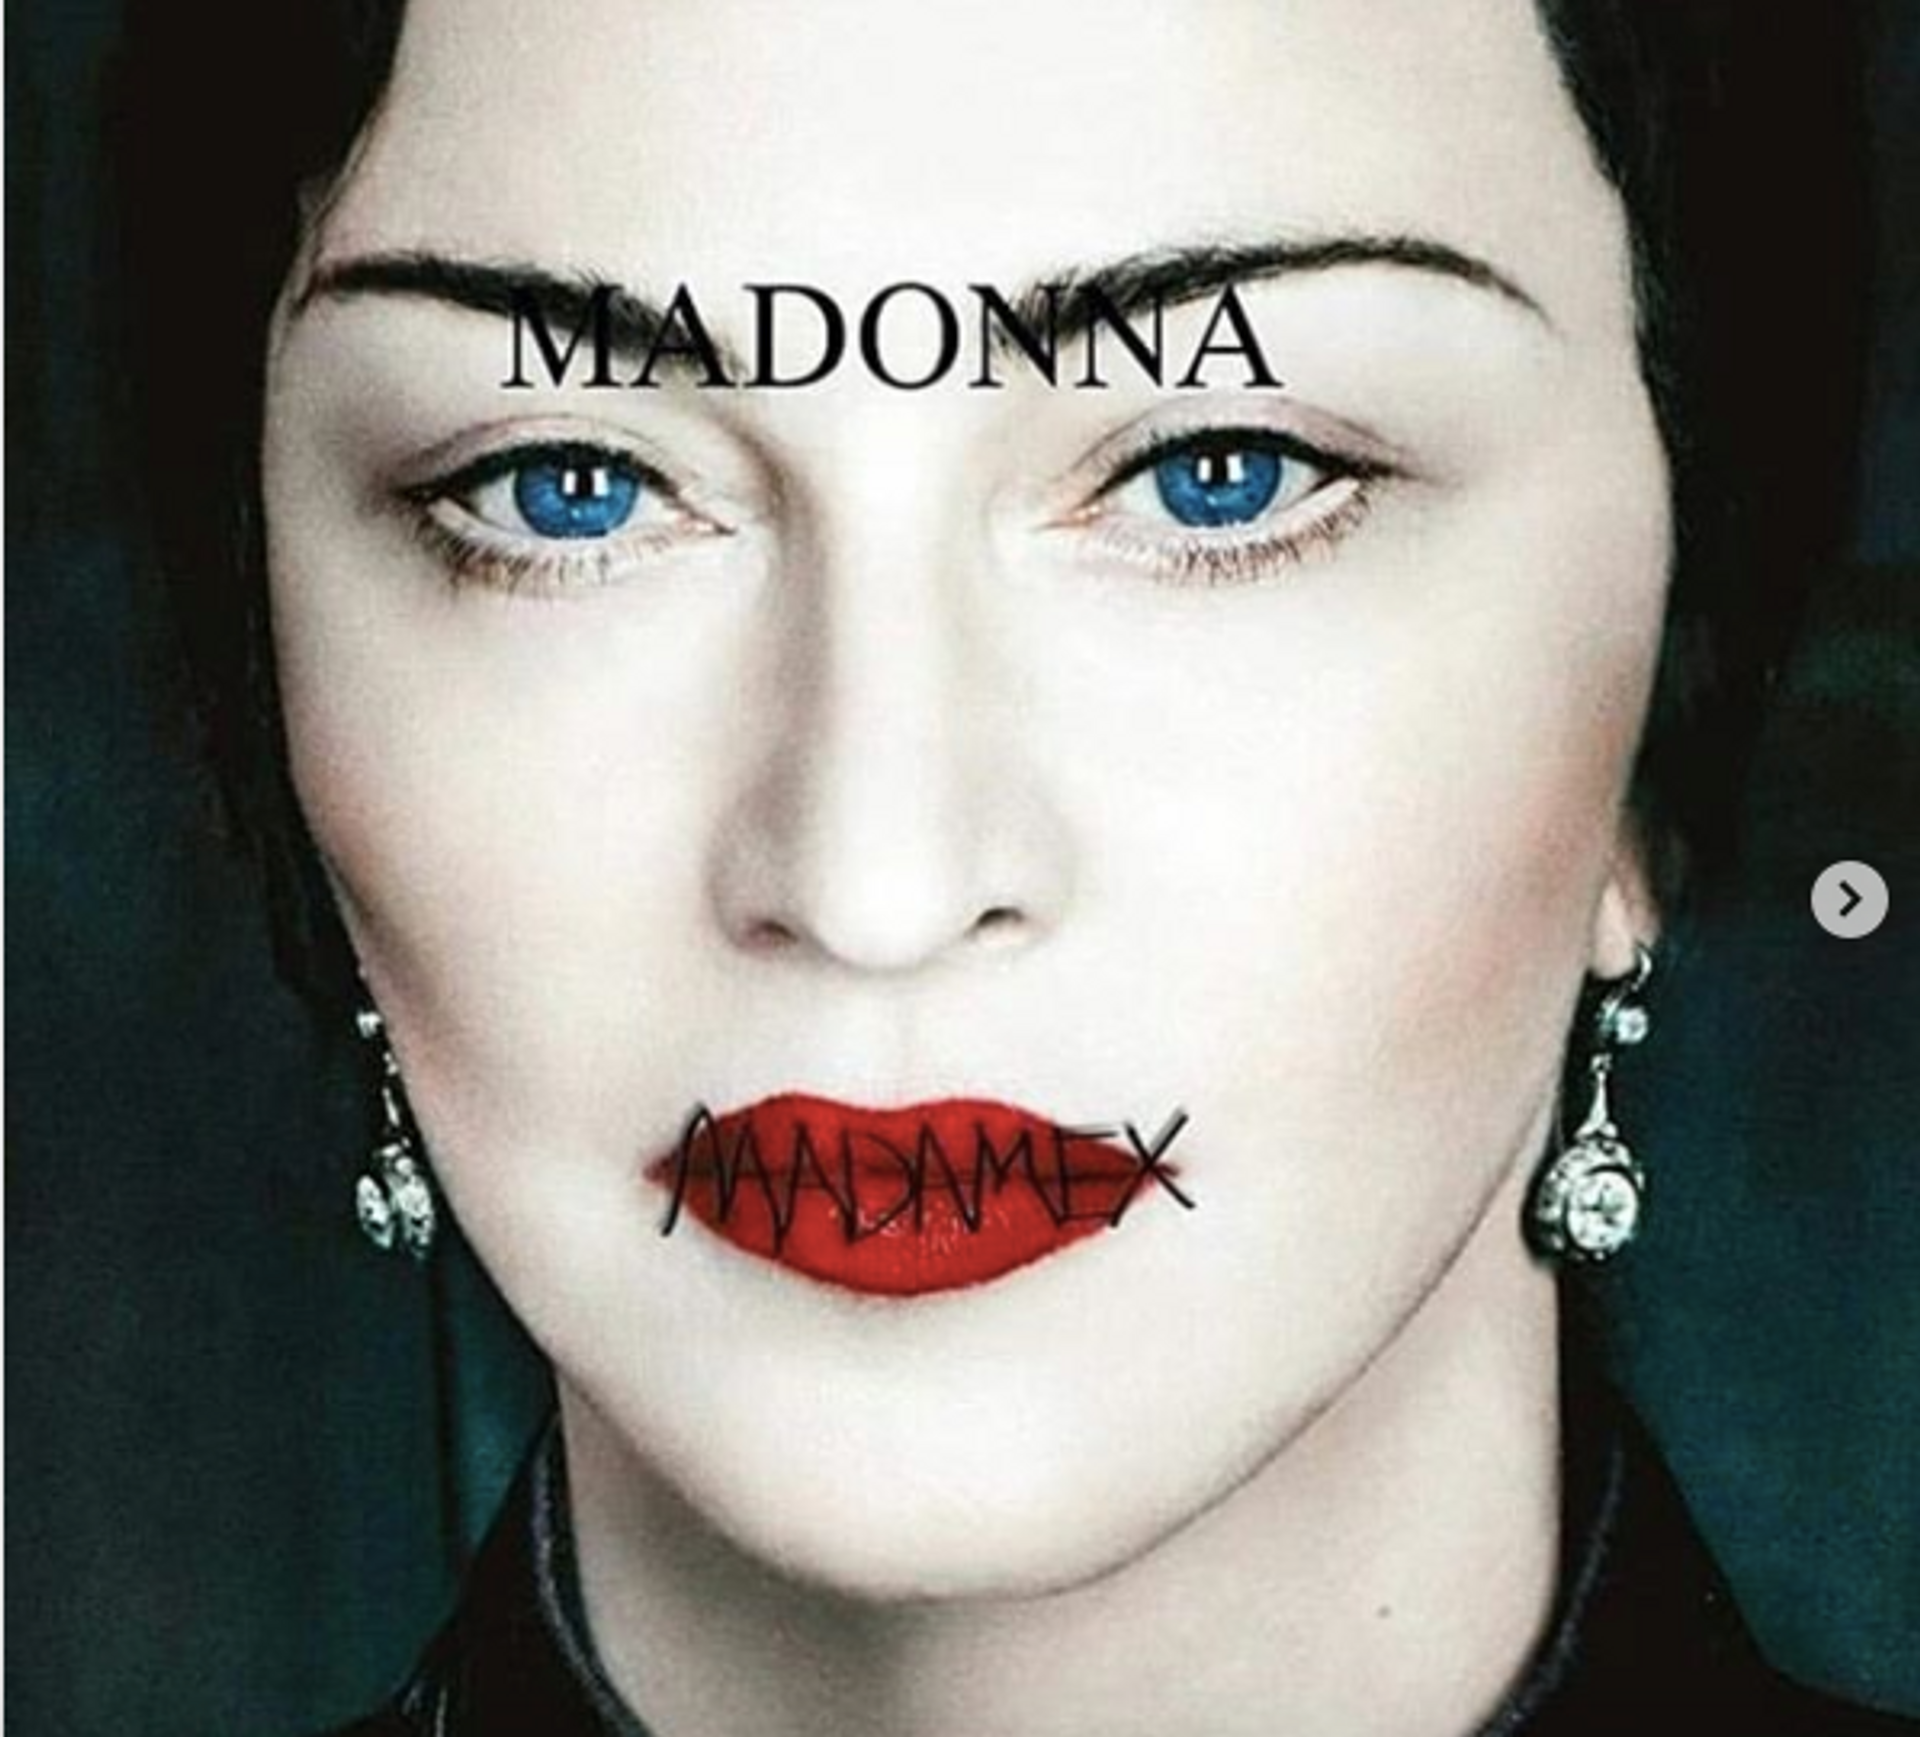 Madonna's promo image for her new album, Madame X Instagram